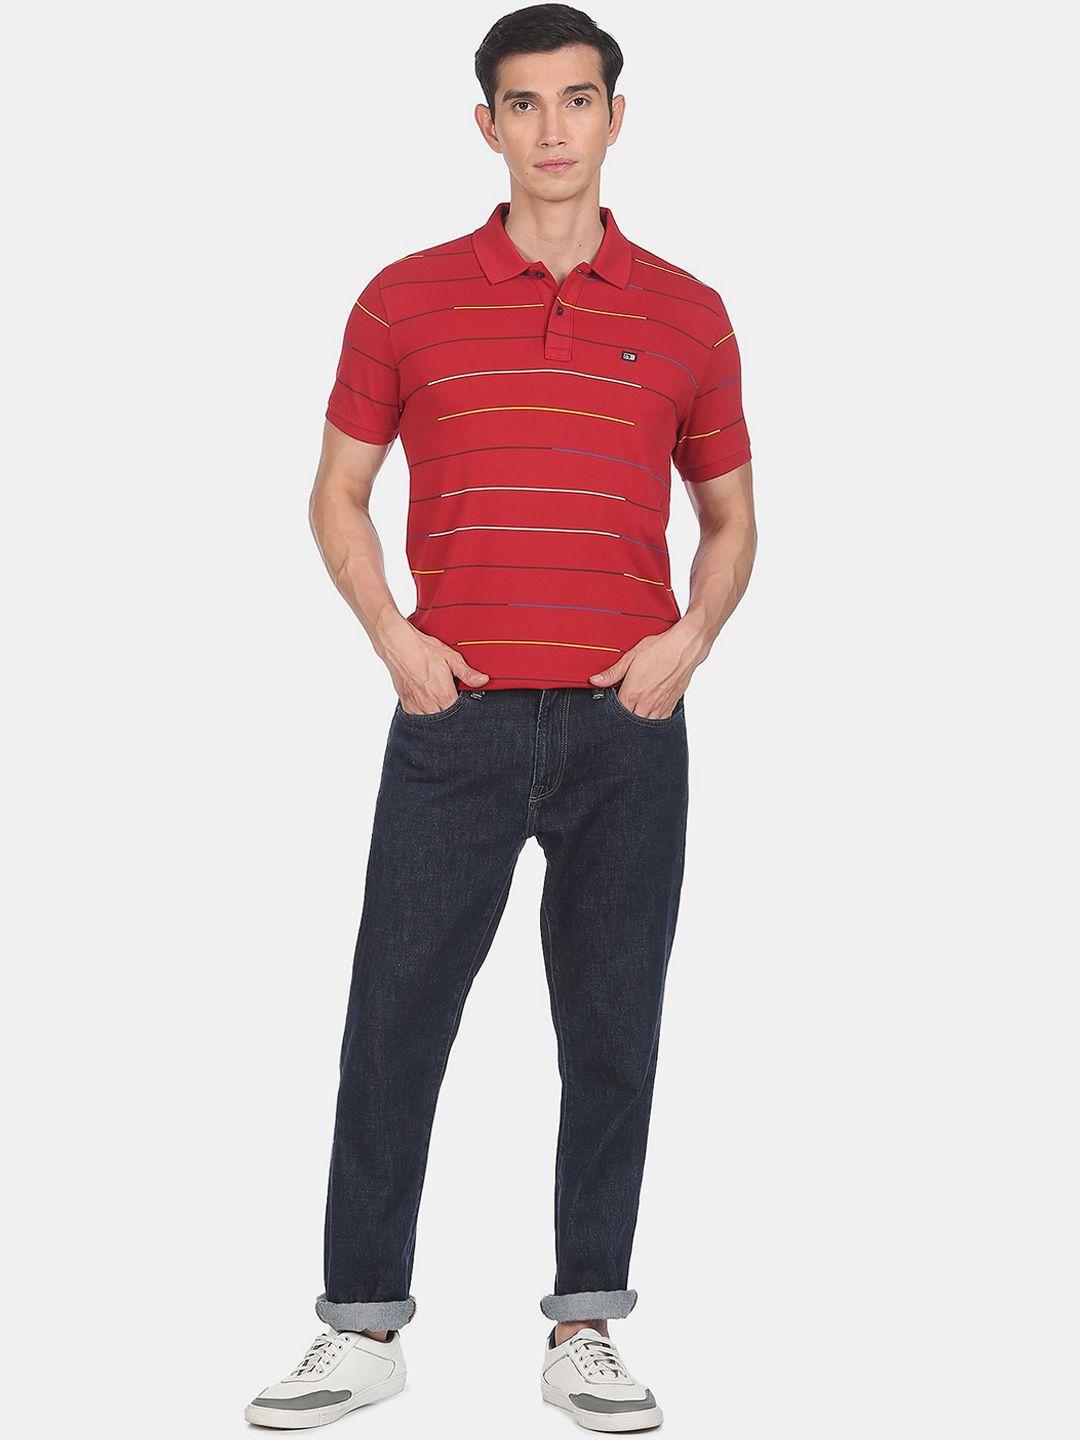 arrow sport men red striped polo collar t-shirt